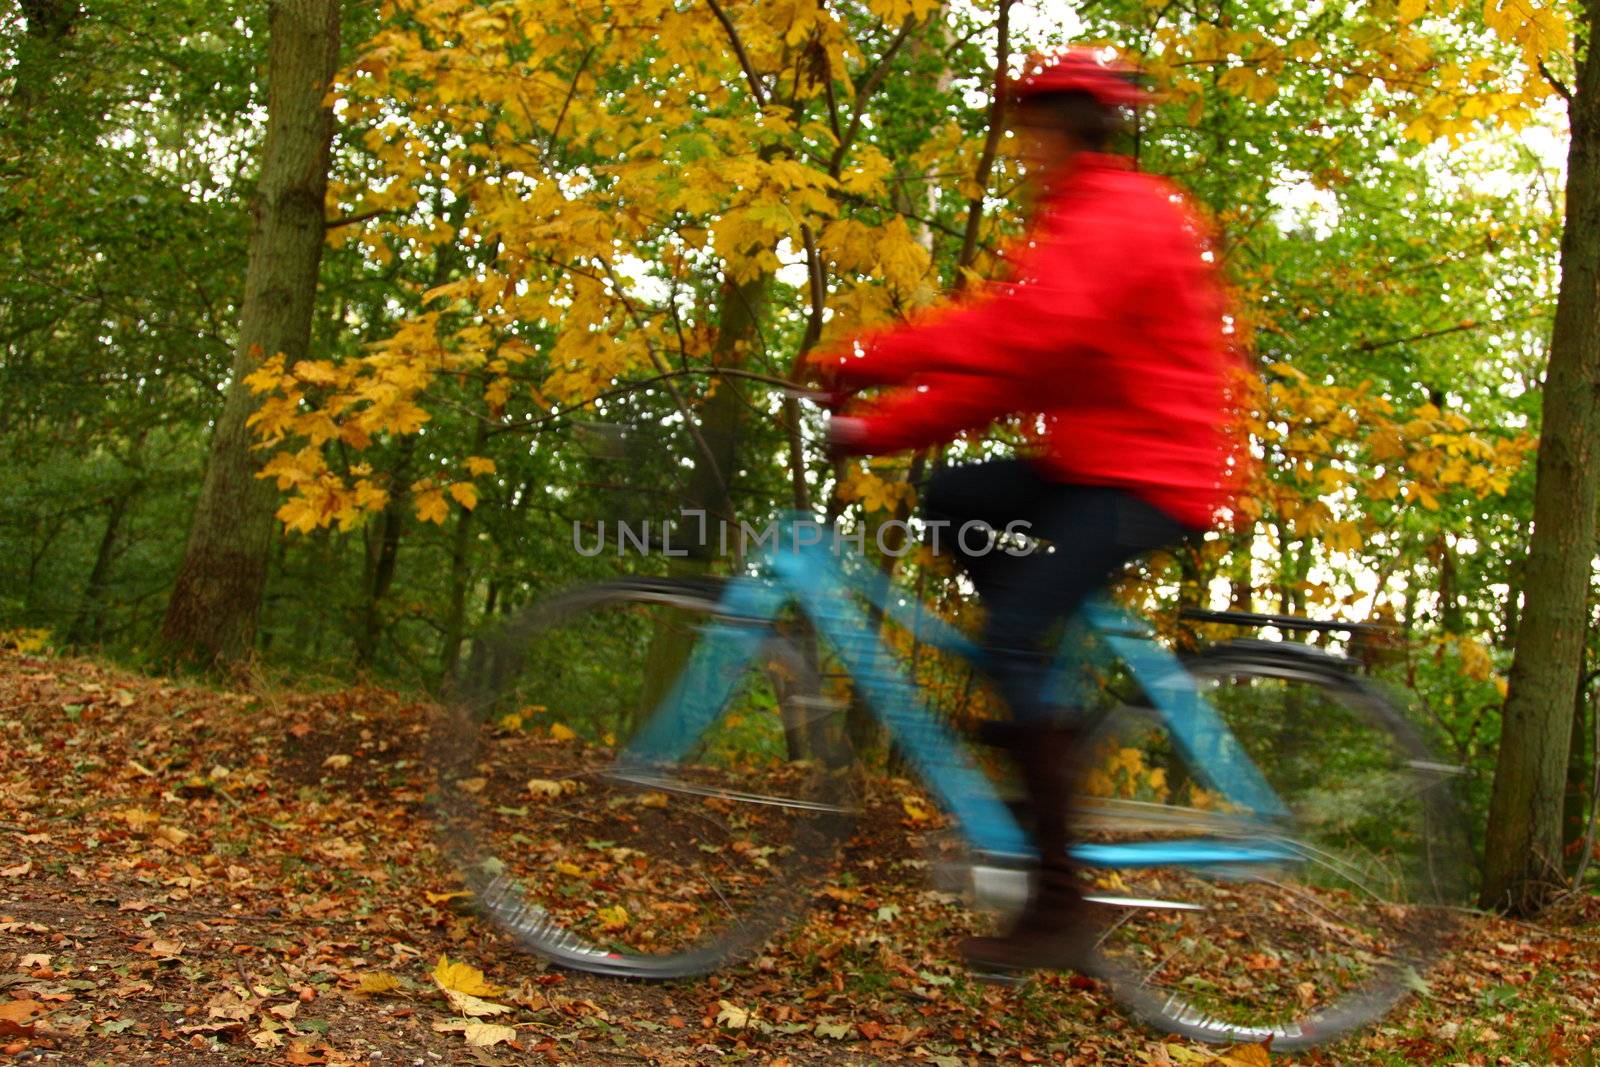 Woman biking in the autumn forest. Motion blurred bike.